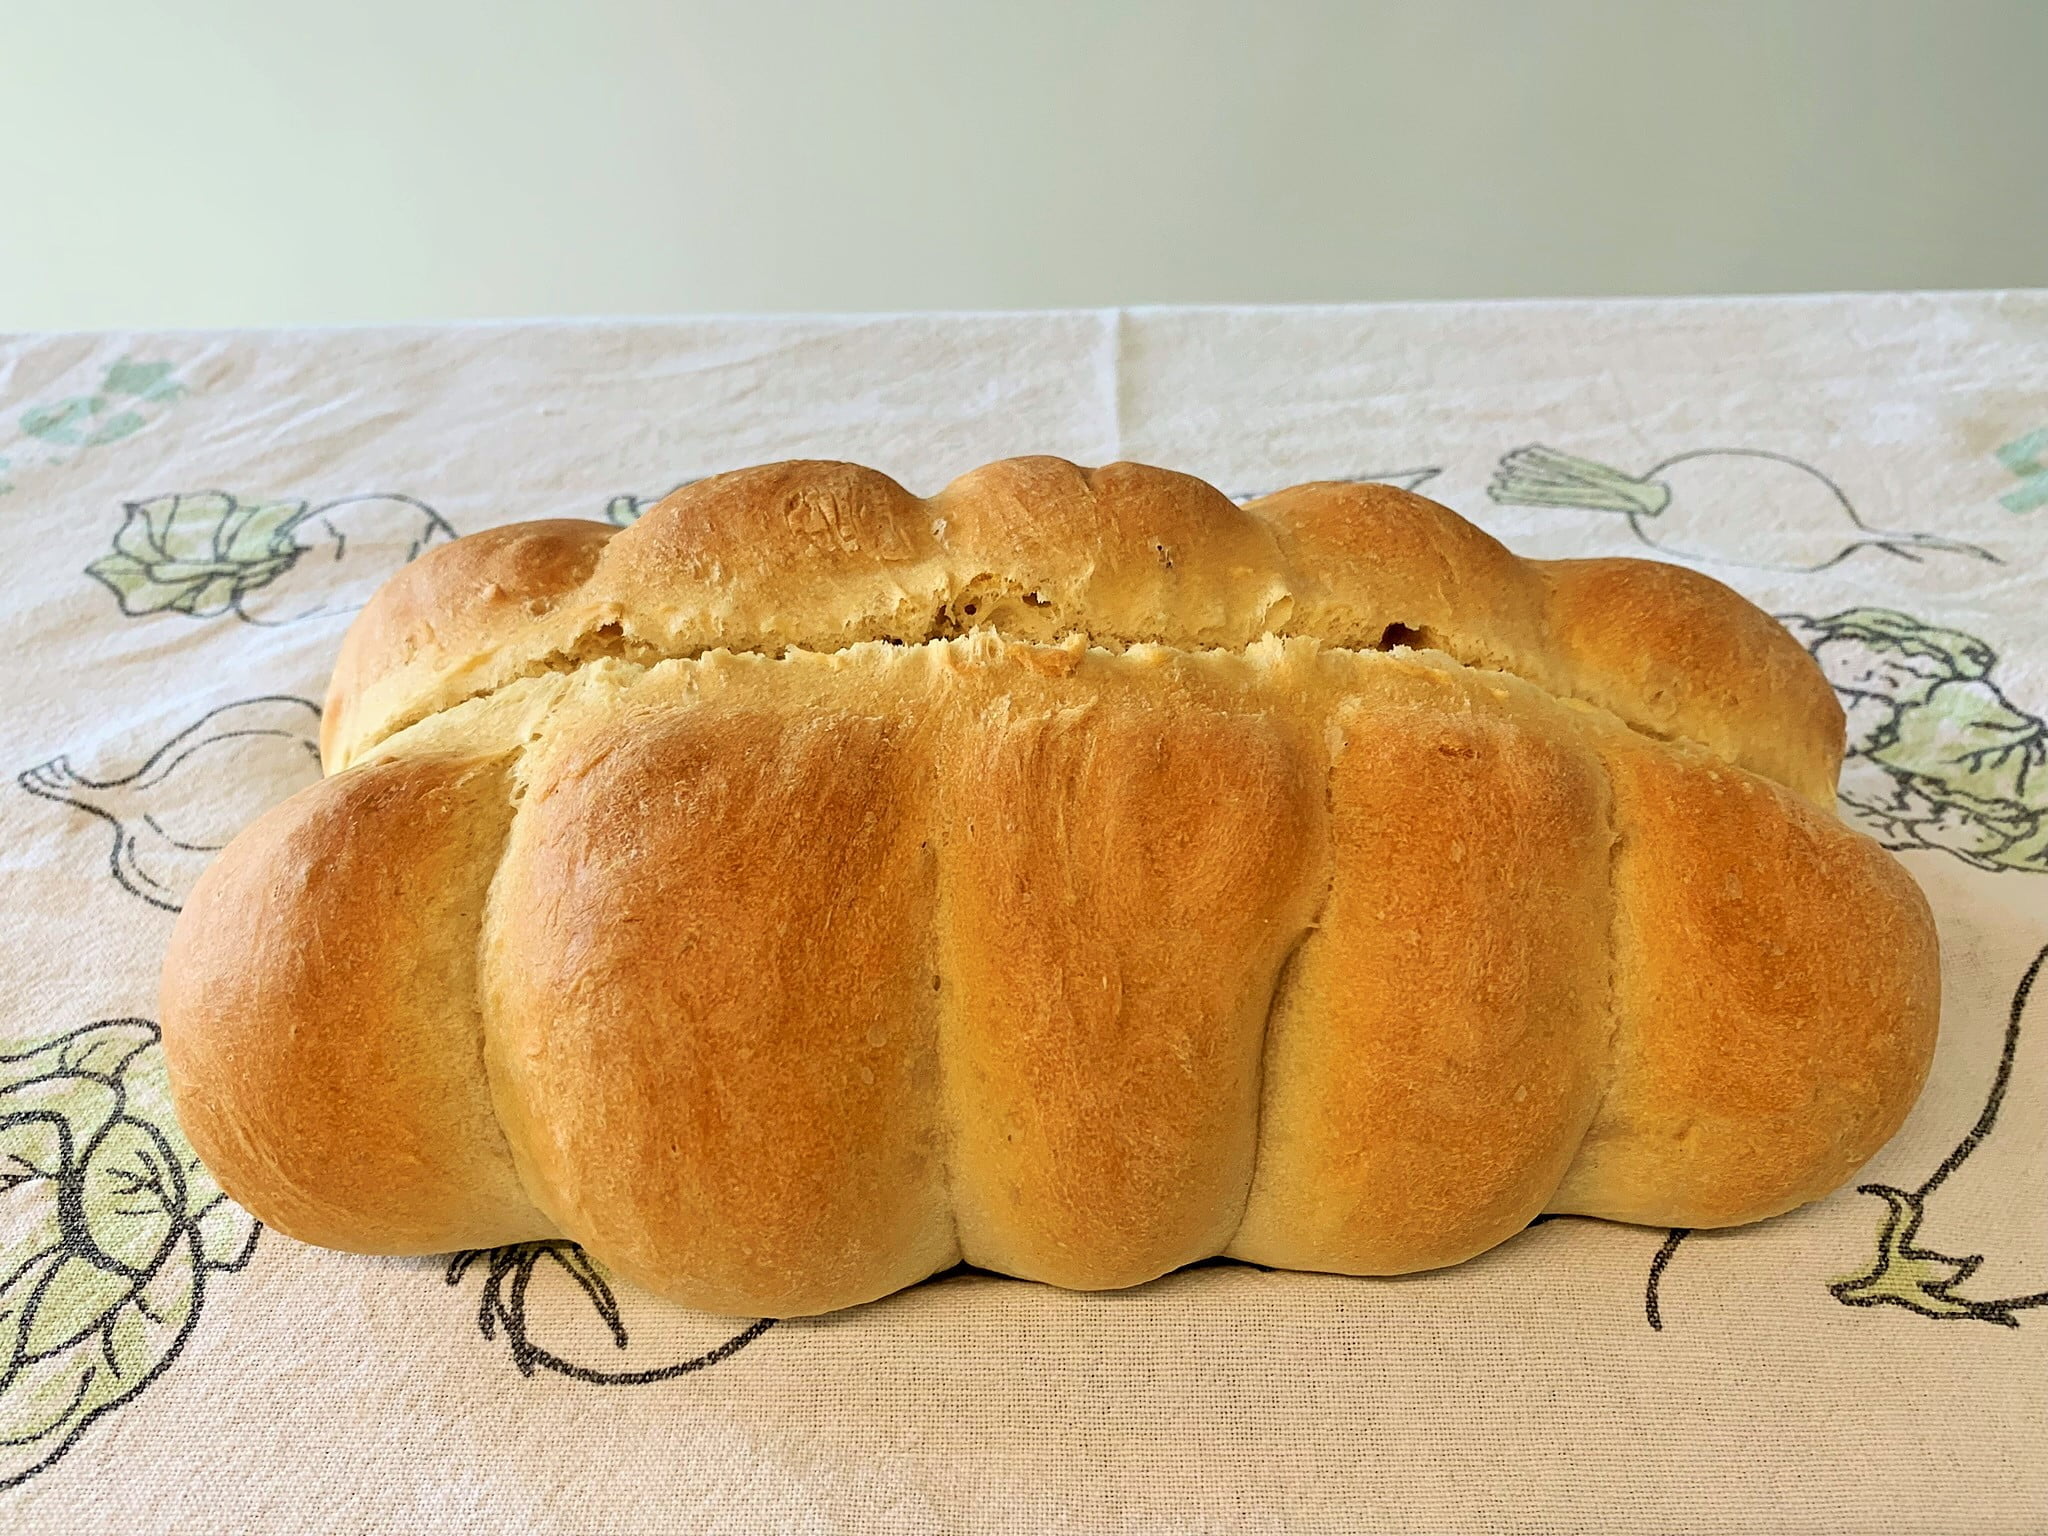 Tessiner Brot pane ticinese